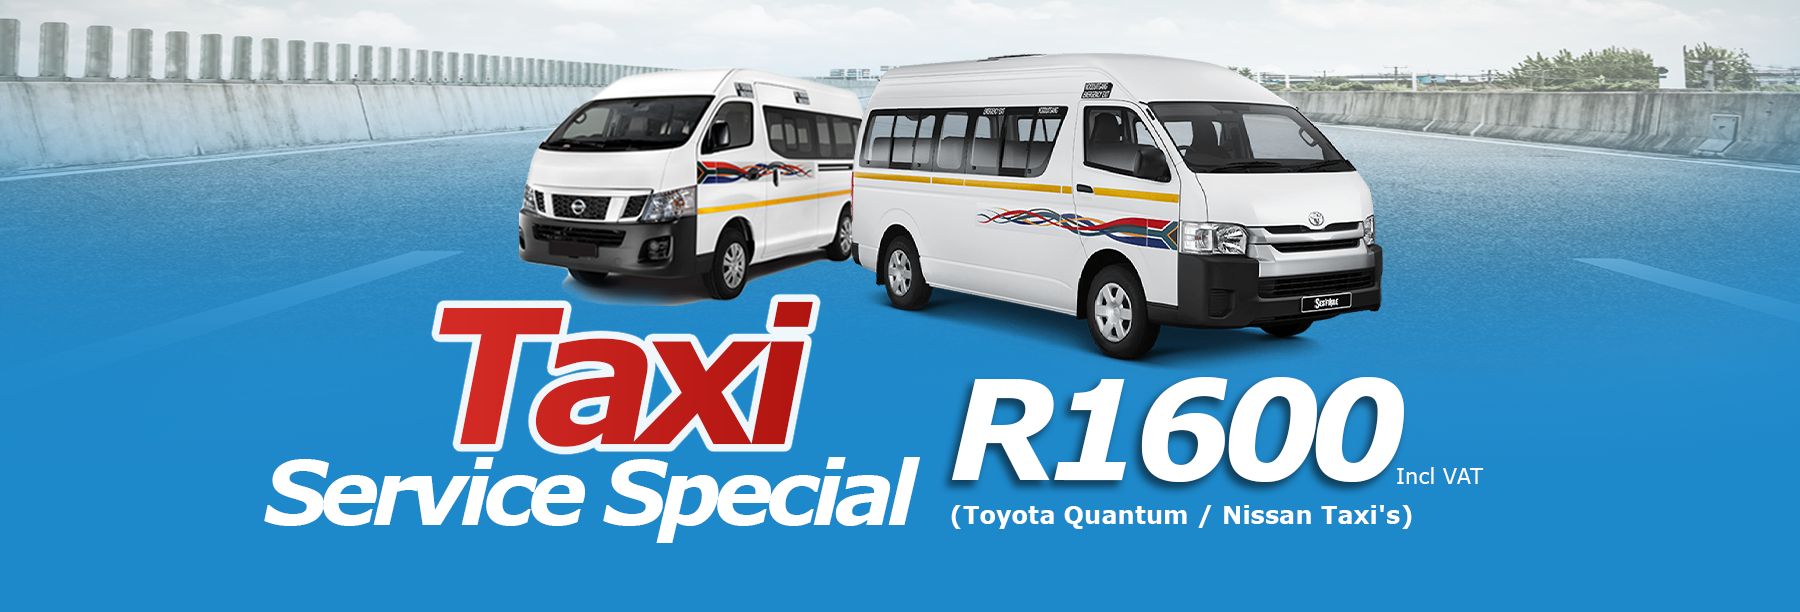 Taxi Special ( Toyota Quantum / Nissan Taxi's ) R1600 Including VAT.